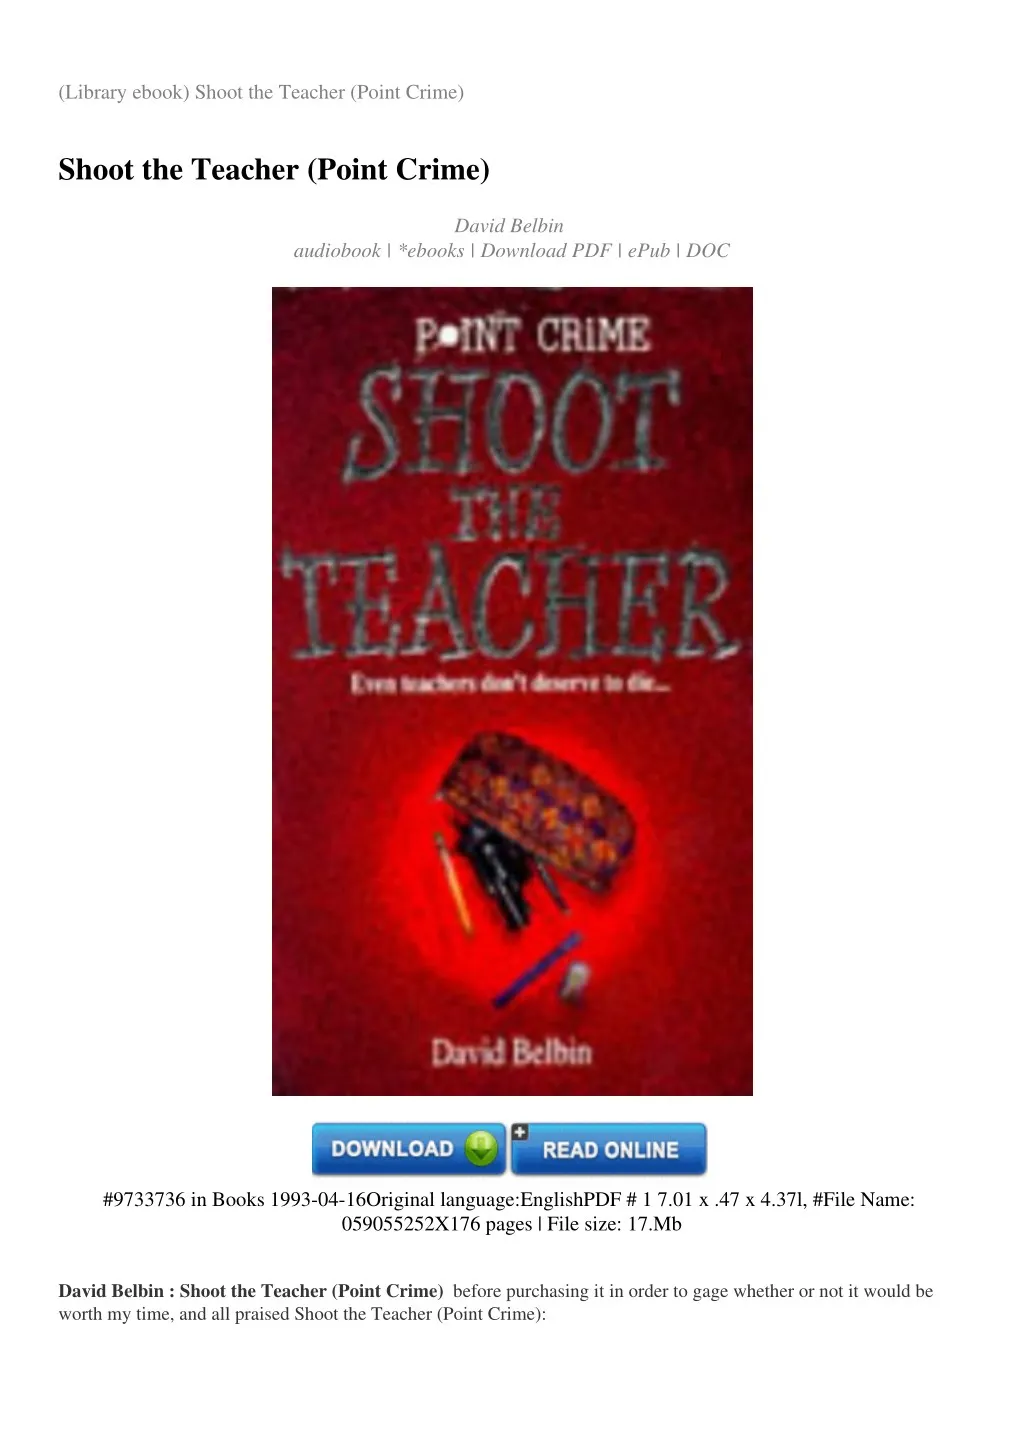 library ebook shoot the teacher point crime